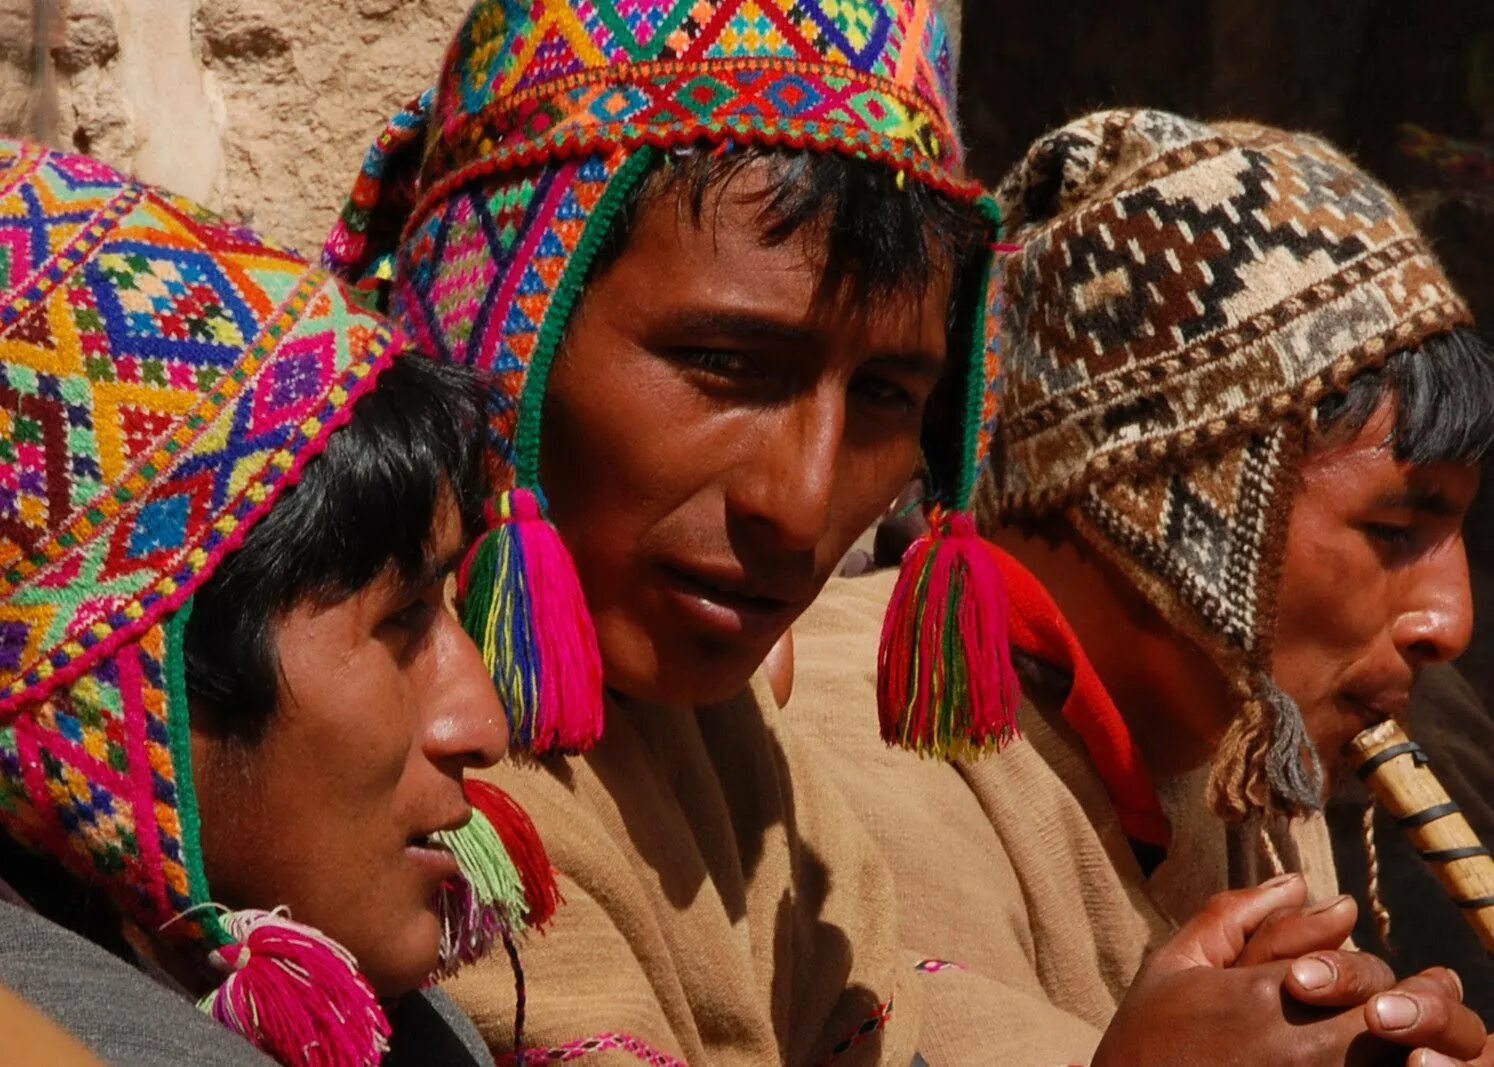 Народы страны перу. Аймара народ Южной Америки. Индейцы аймара в Южной Америке. Народ Южной Америки индейцы кечуа. Перуанцы раса.